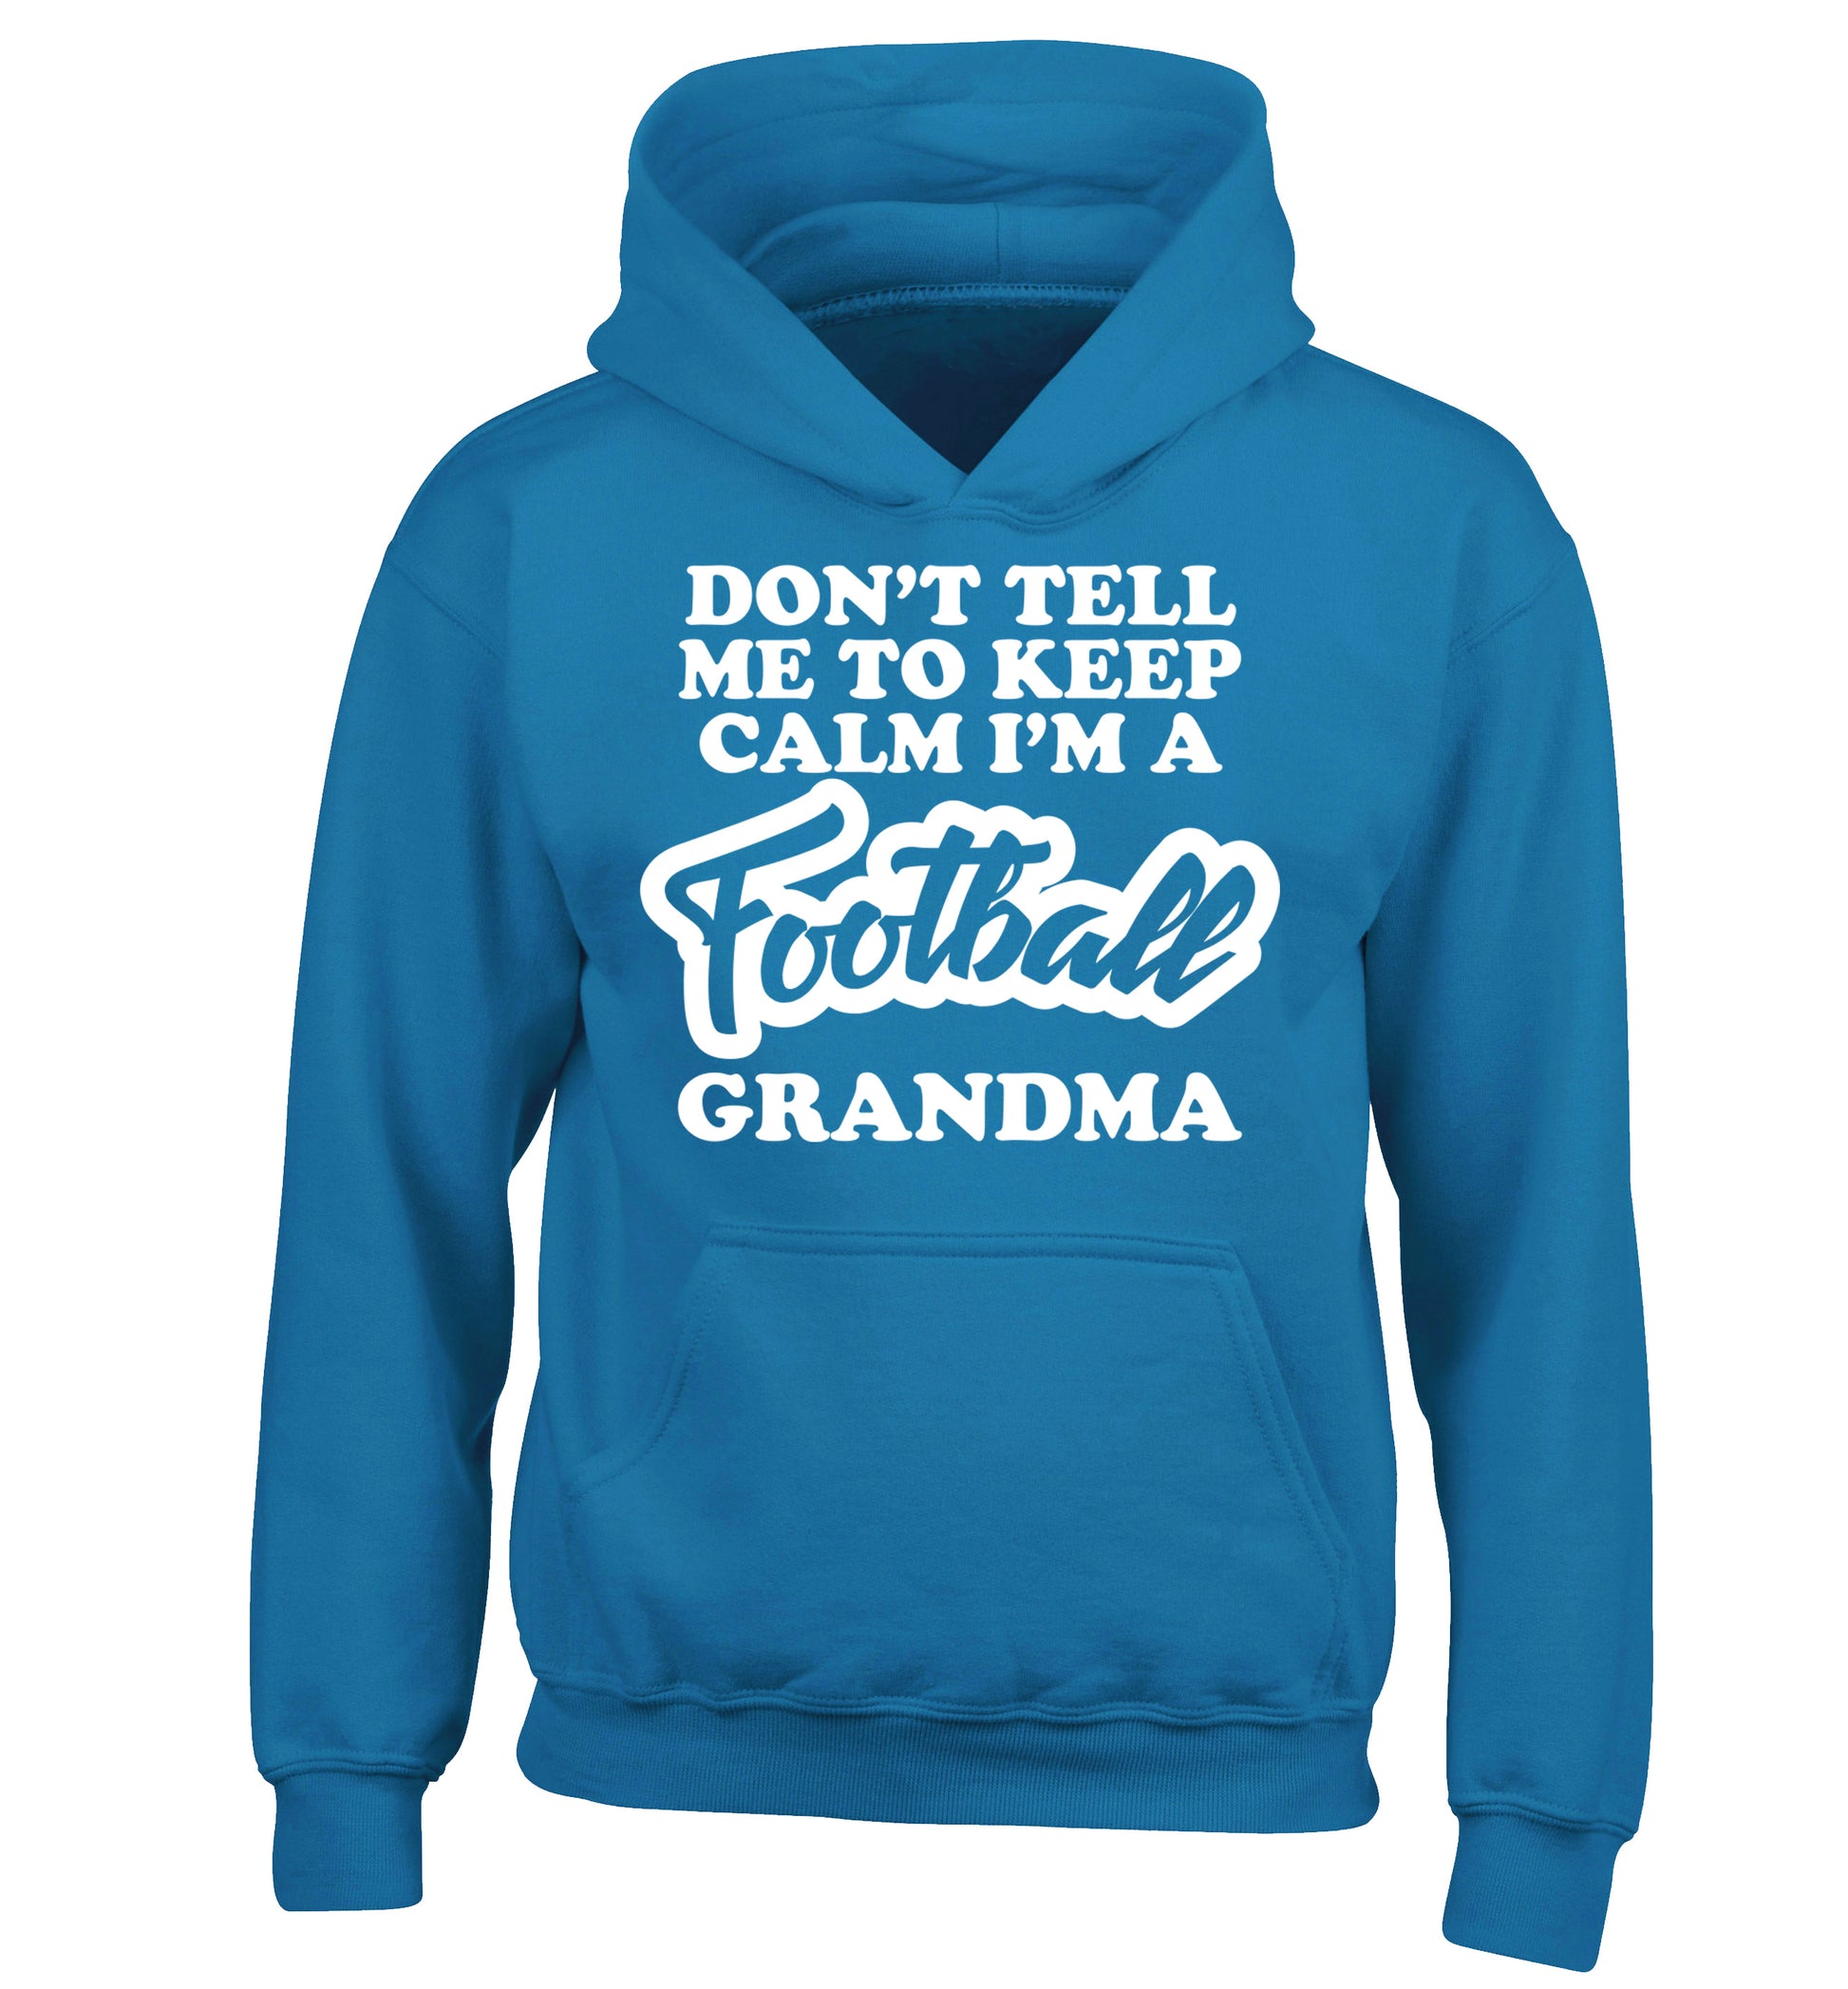 Don't tell me to keep calm I'm a football grandma children's blue hoodie 12-14 Years